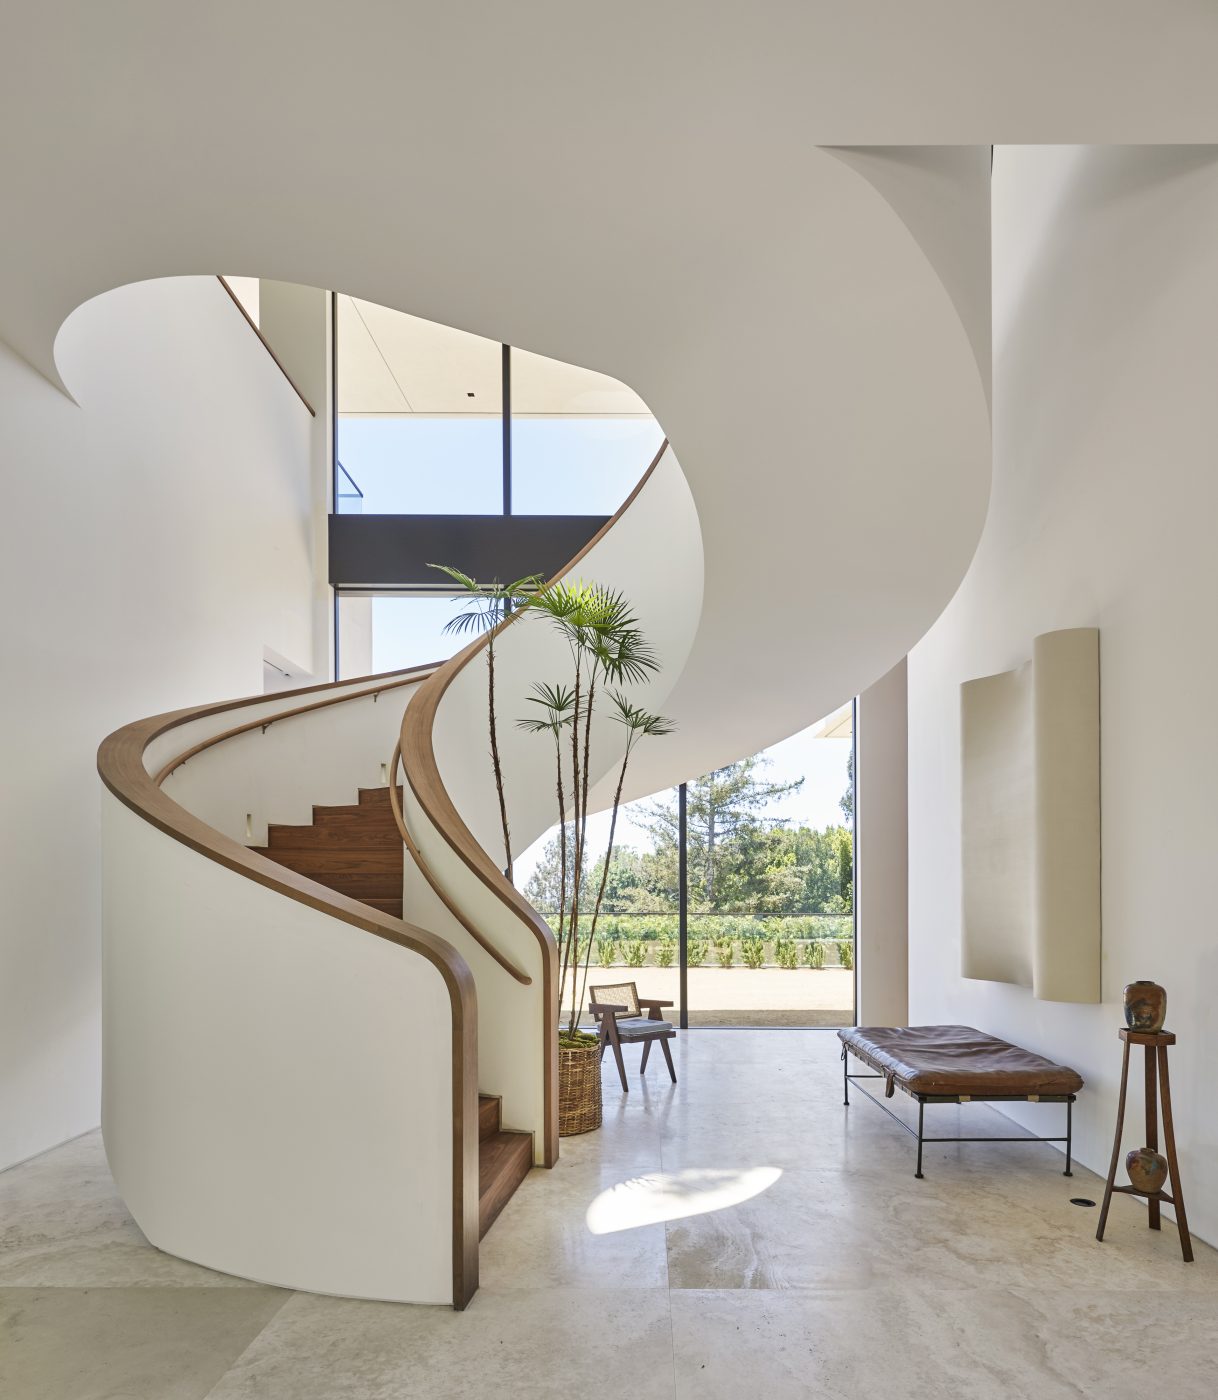 Foyer designed by Mulholland